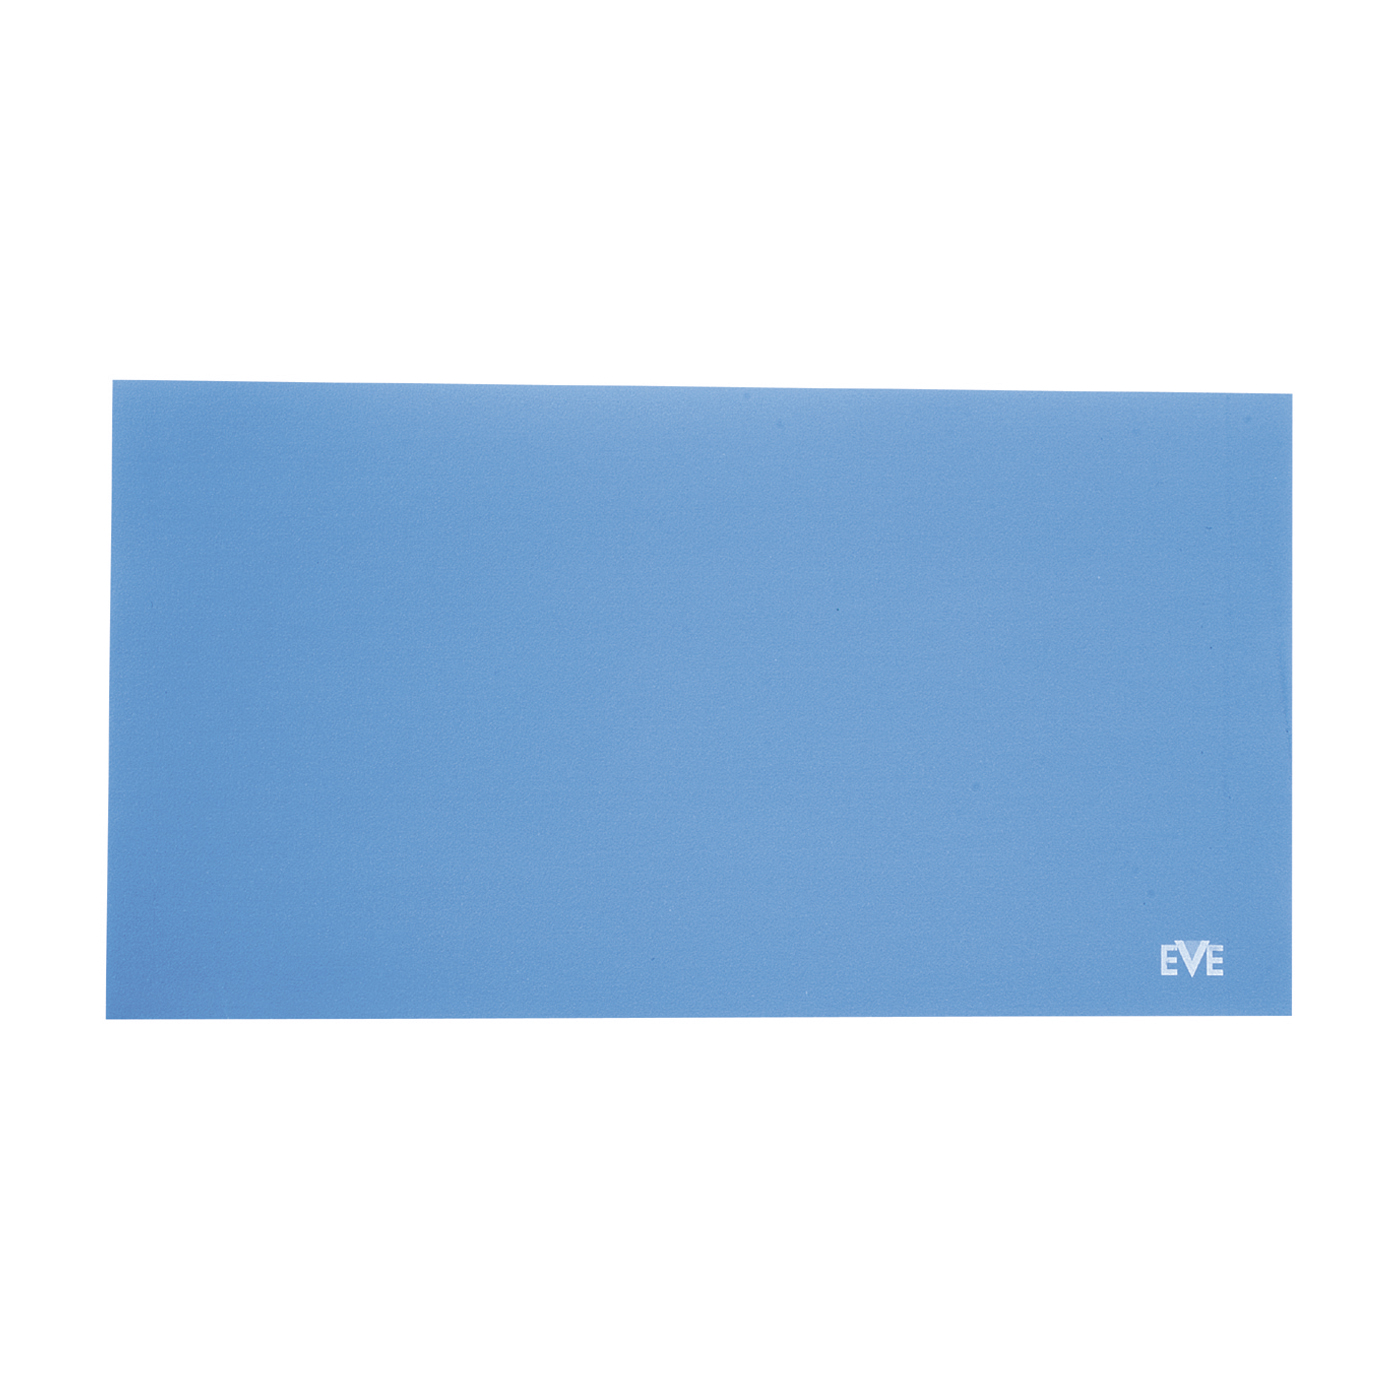 EVE Policloth Poliersystem, K2400, blau, 280 x 150 mm - 3 Stück